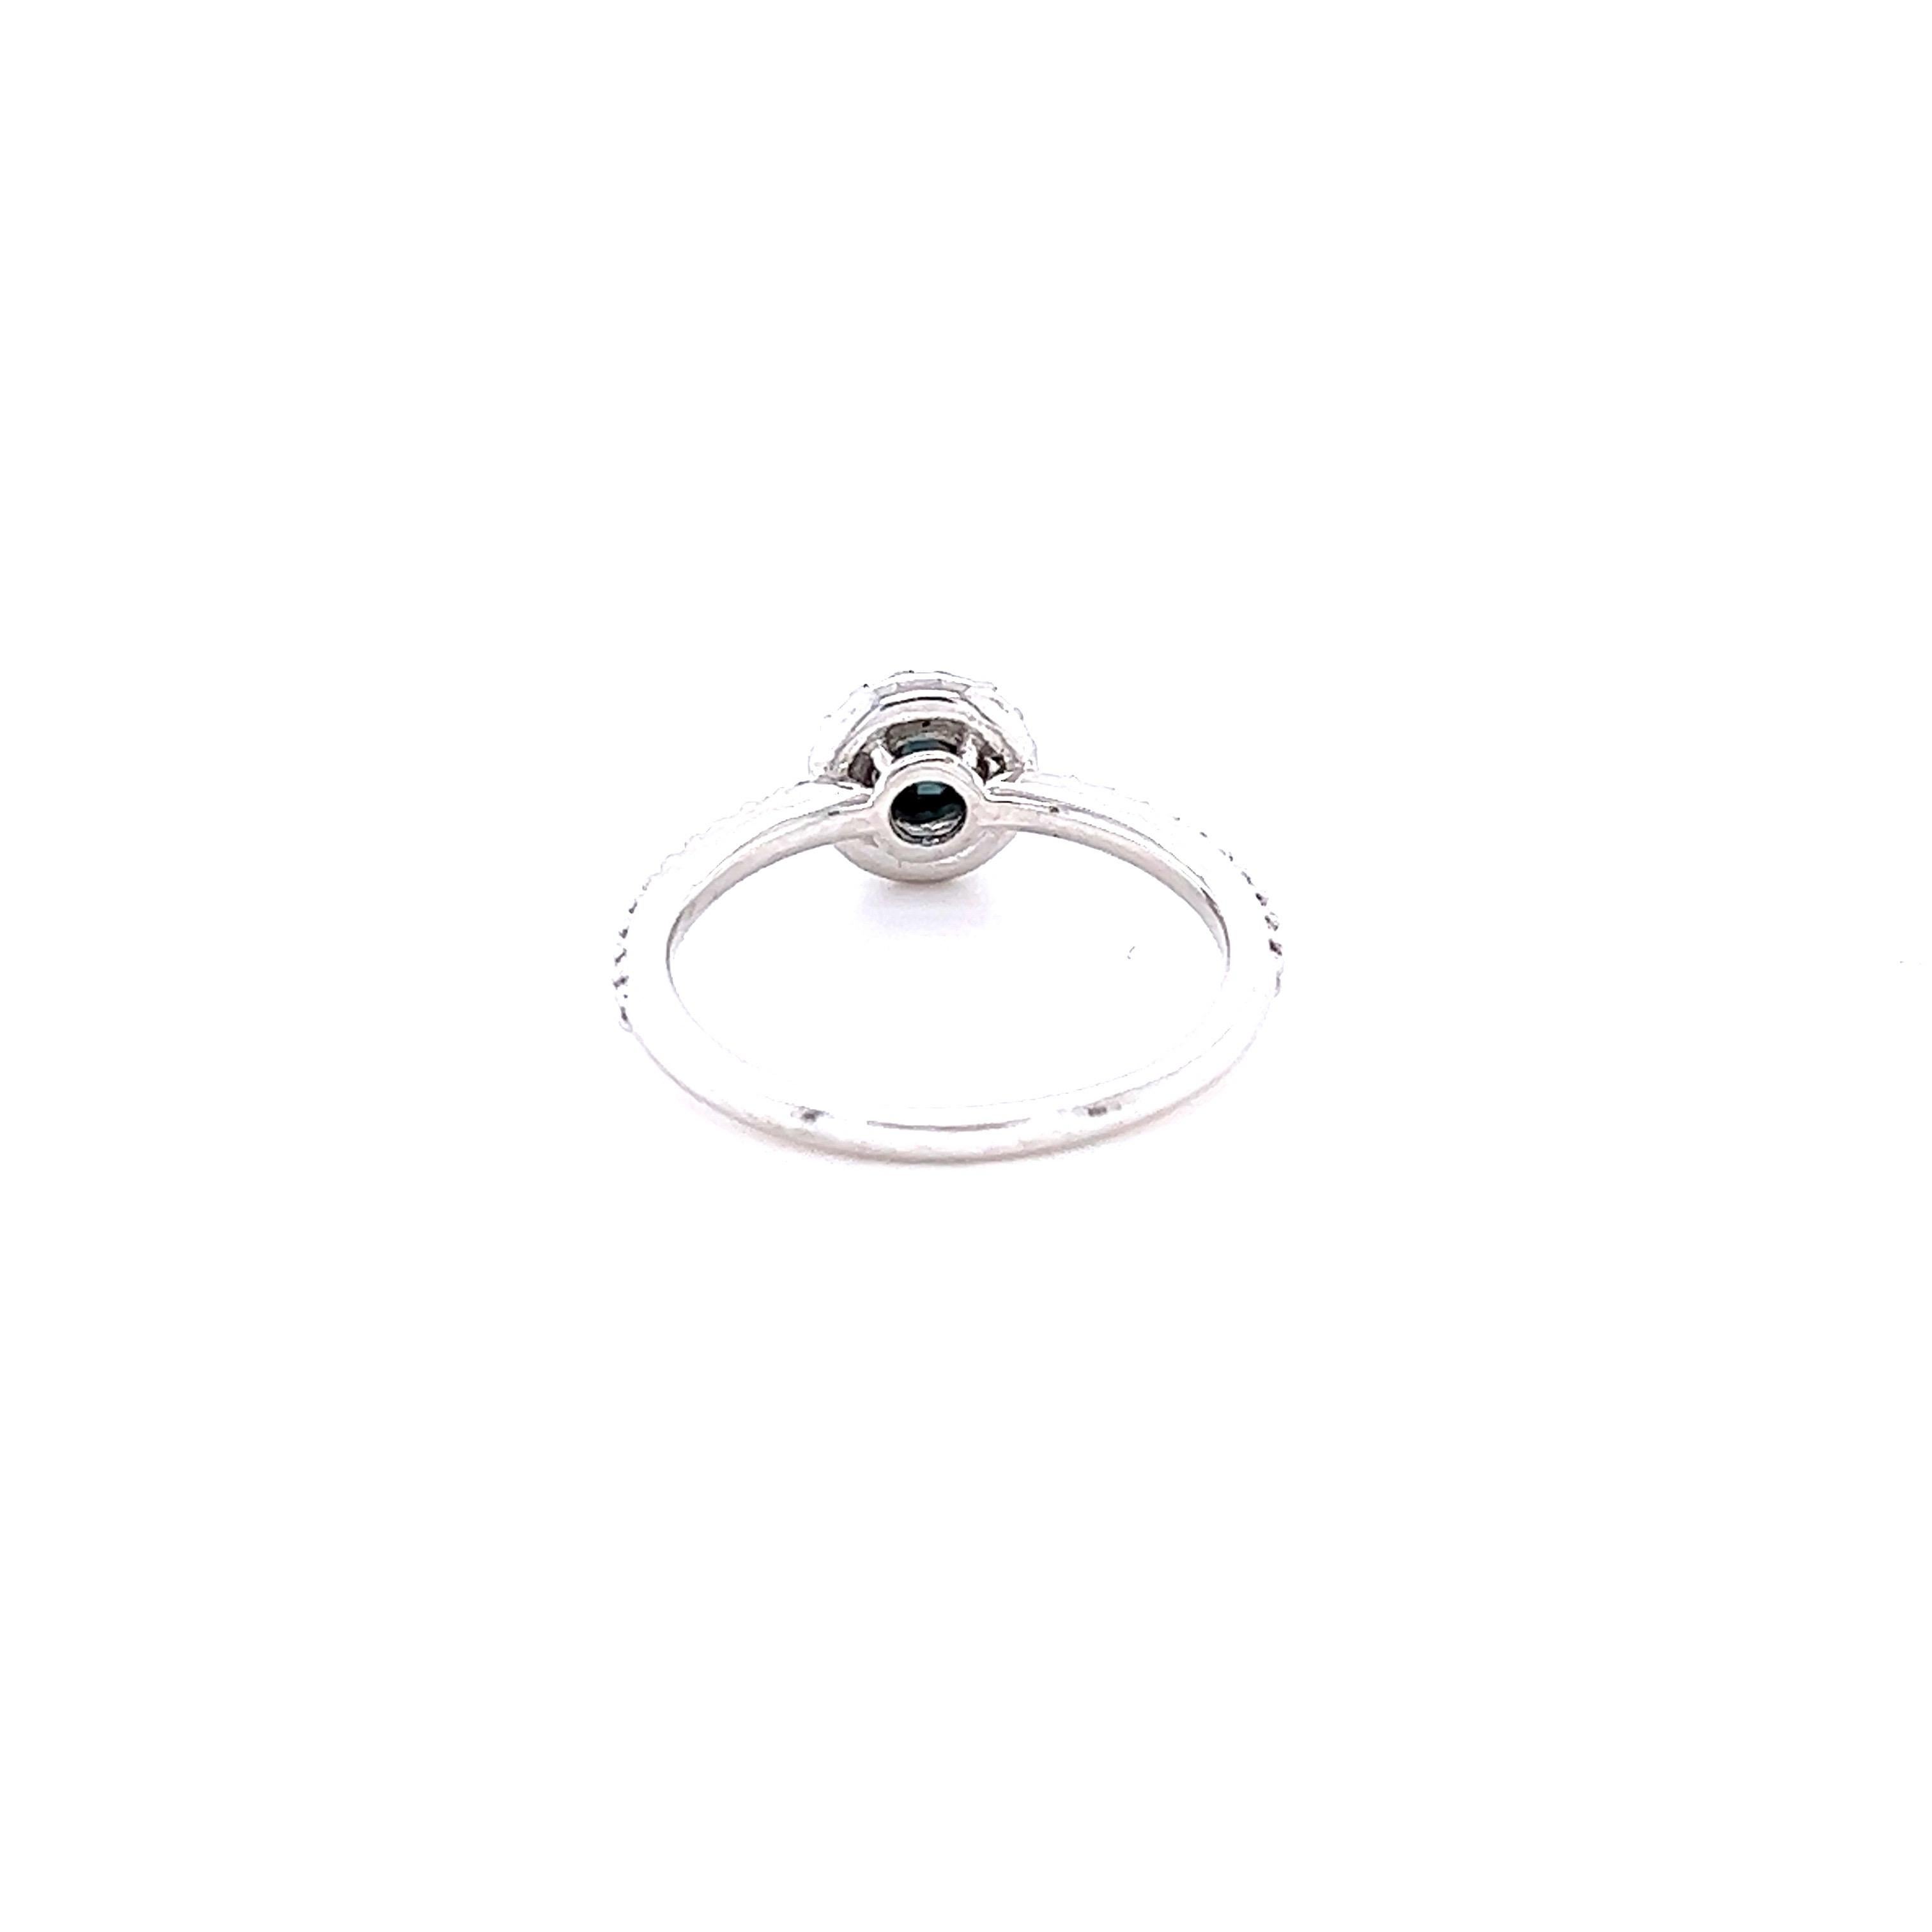 Round Cut 1.14 Carat Blue Sapphire Diamond 14 Karat White Gold Ring For Sale